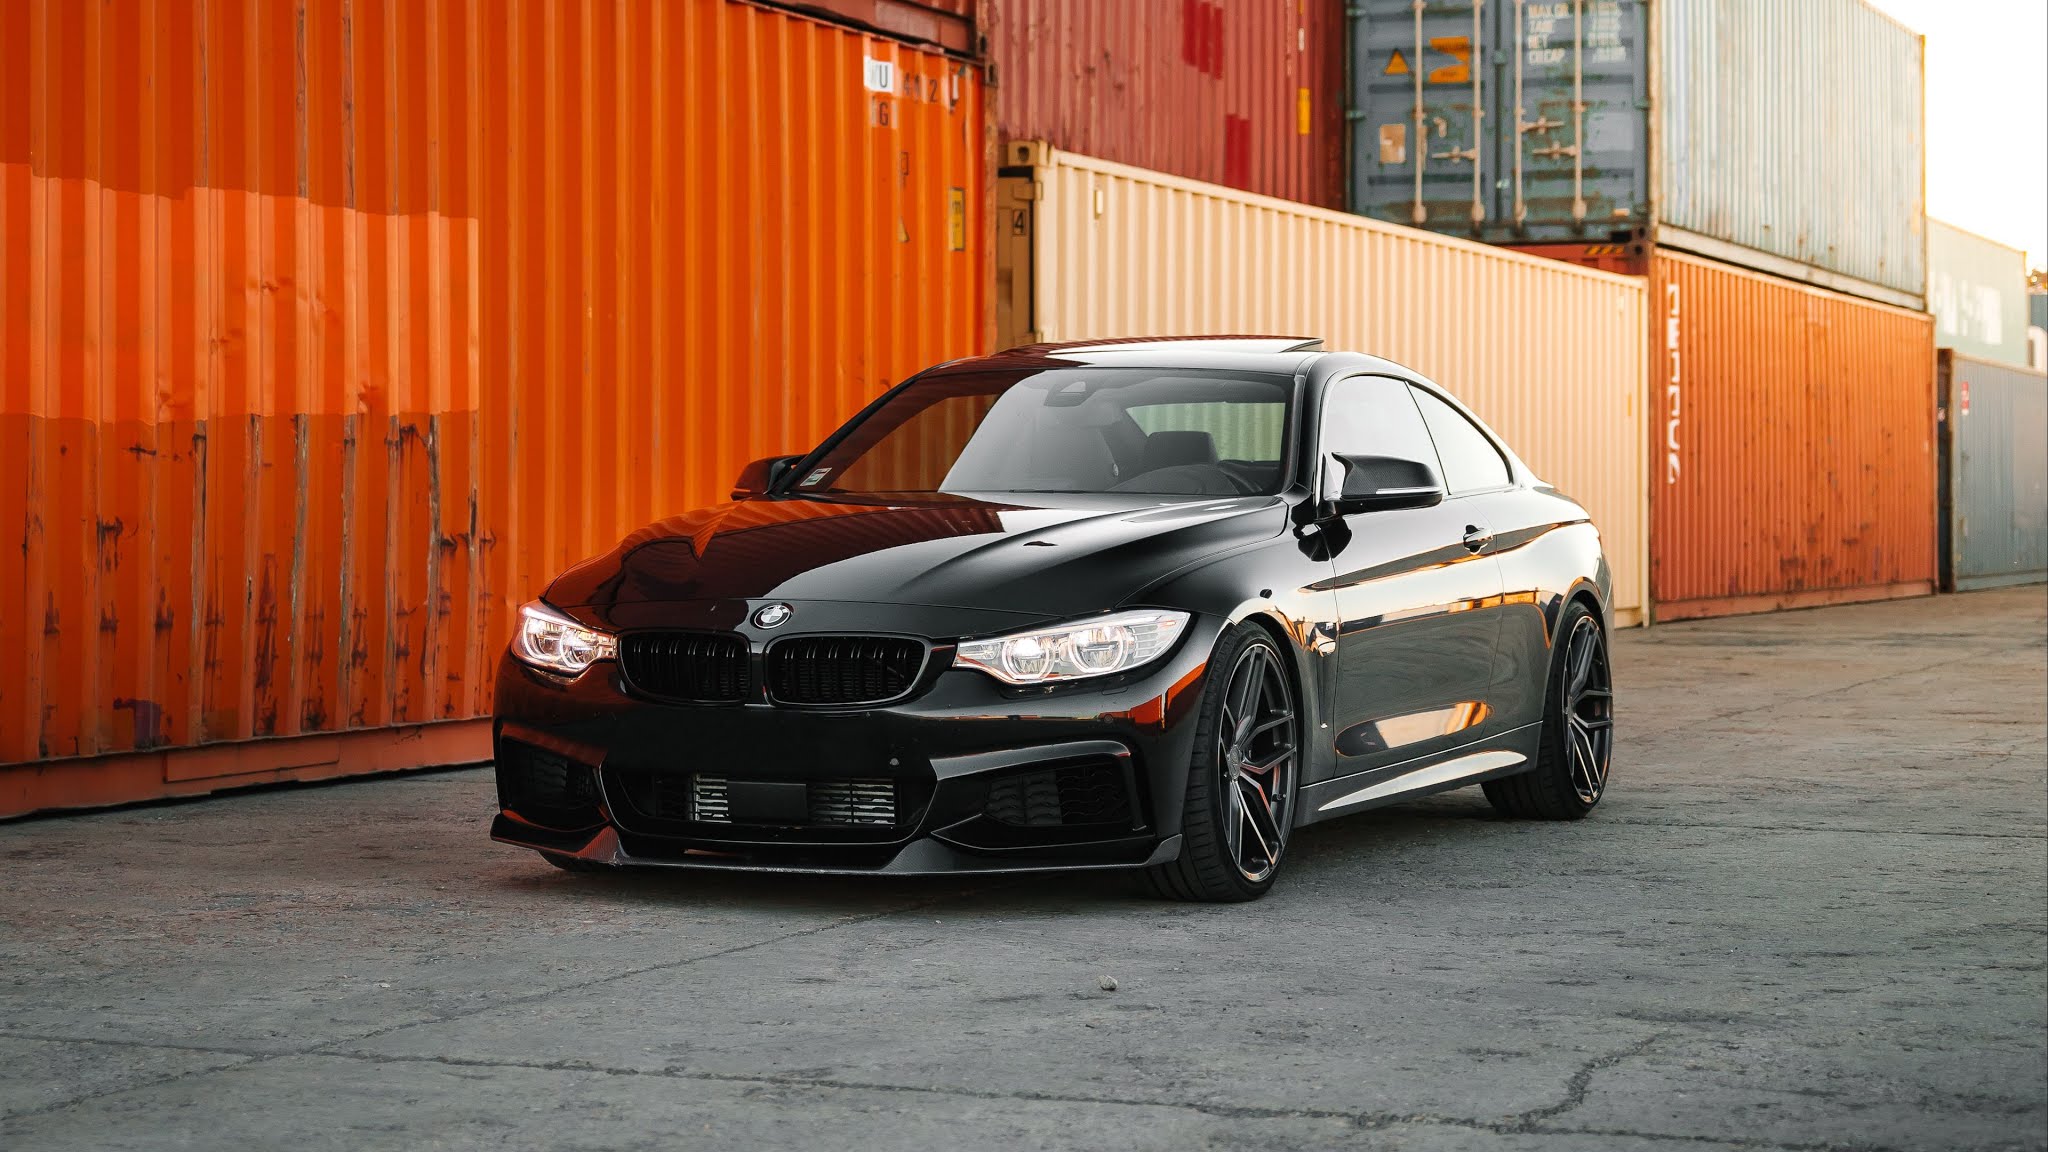 BMW 3 Series, Black, Sportscar